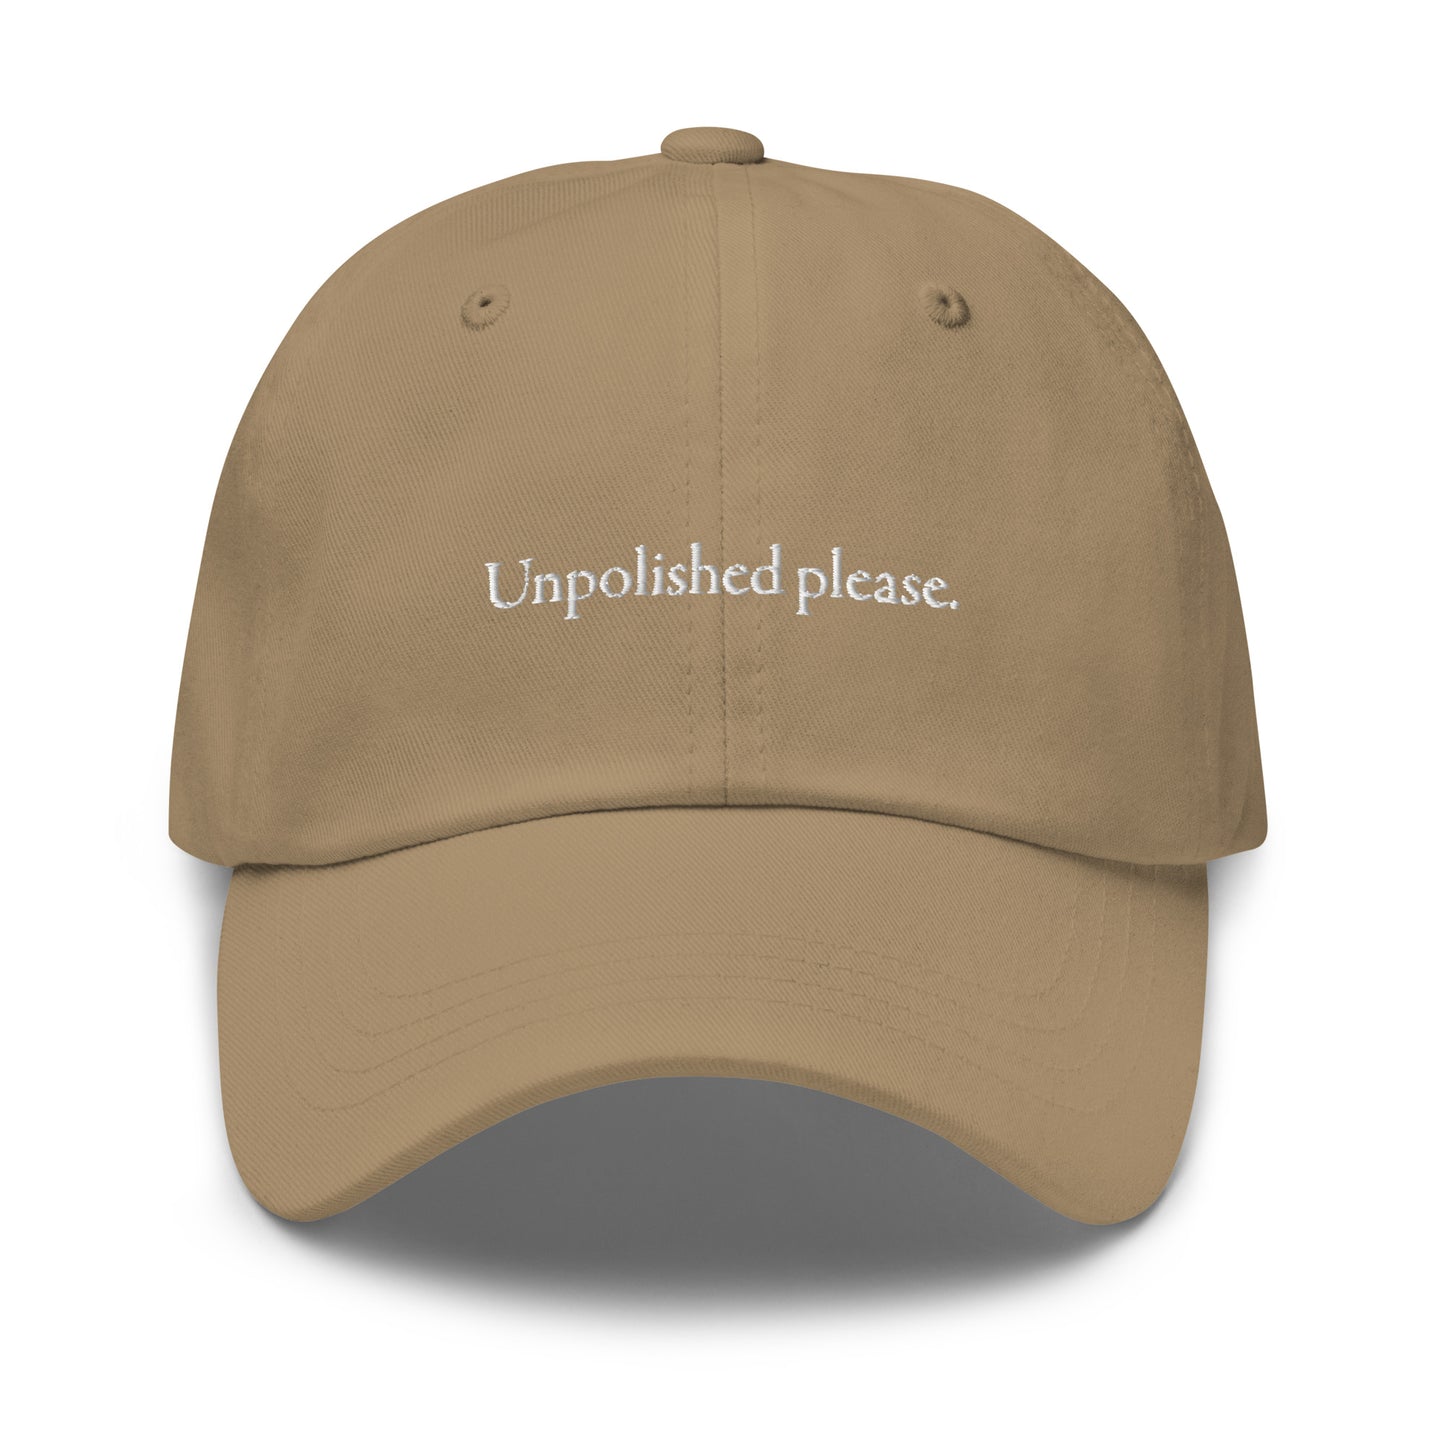 Unpolished please dad hat